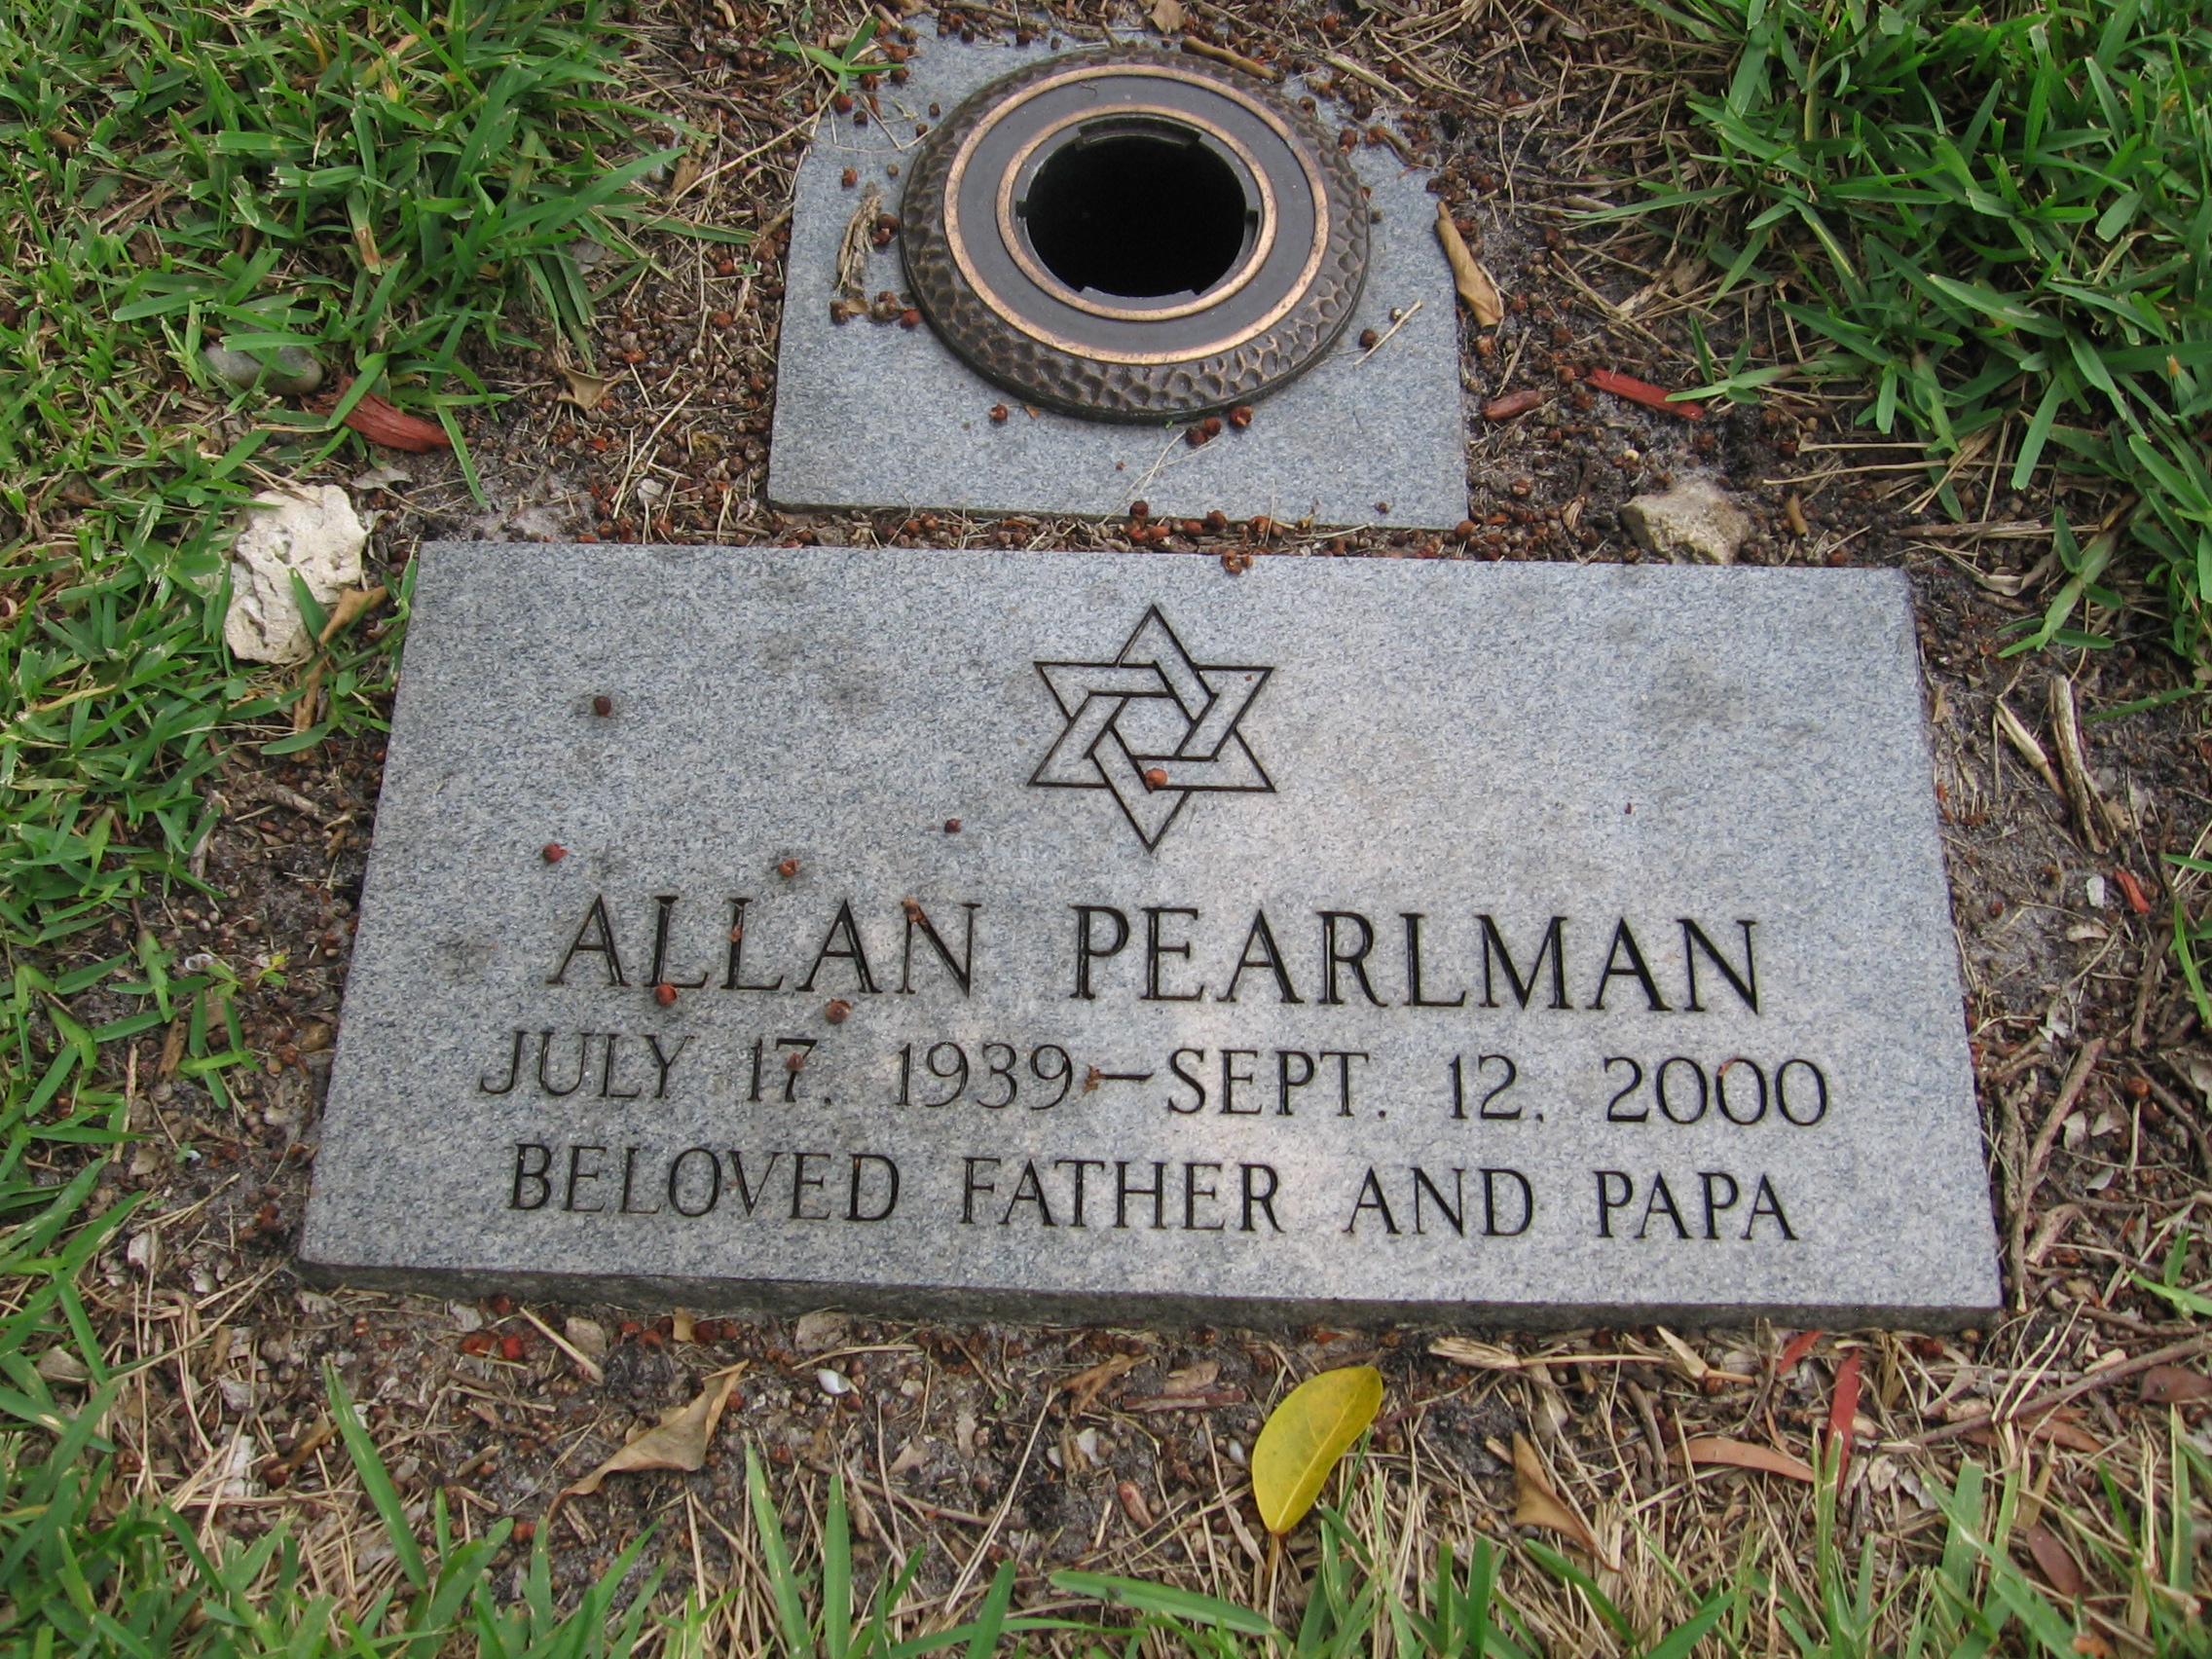 Allan Pearlman